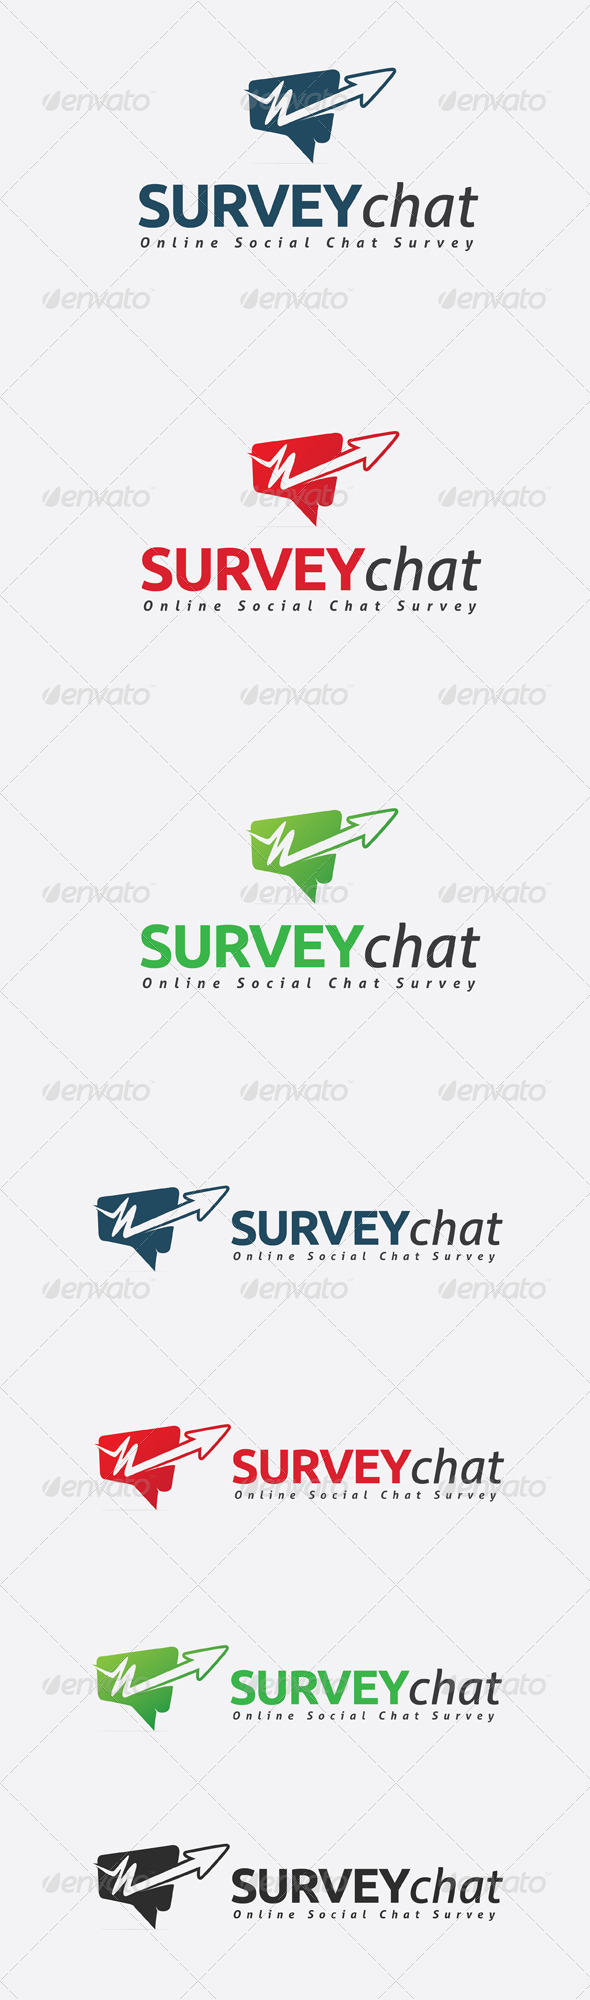 GraphicRiver Survey Chat Logo 6623214